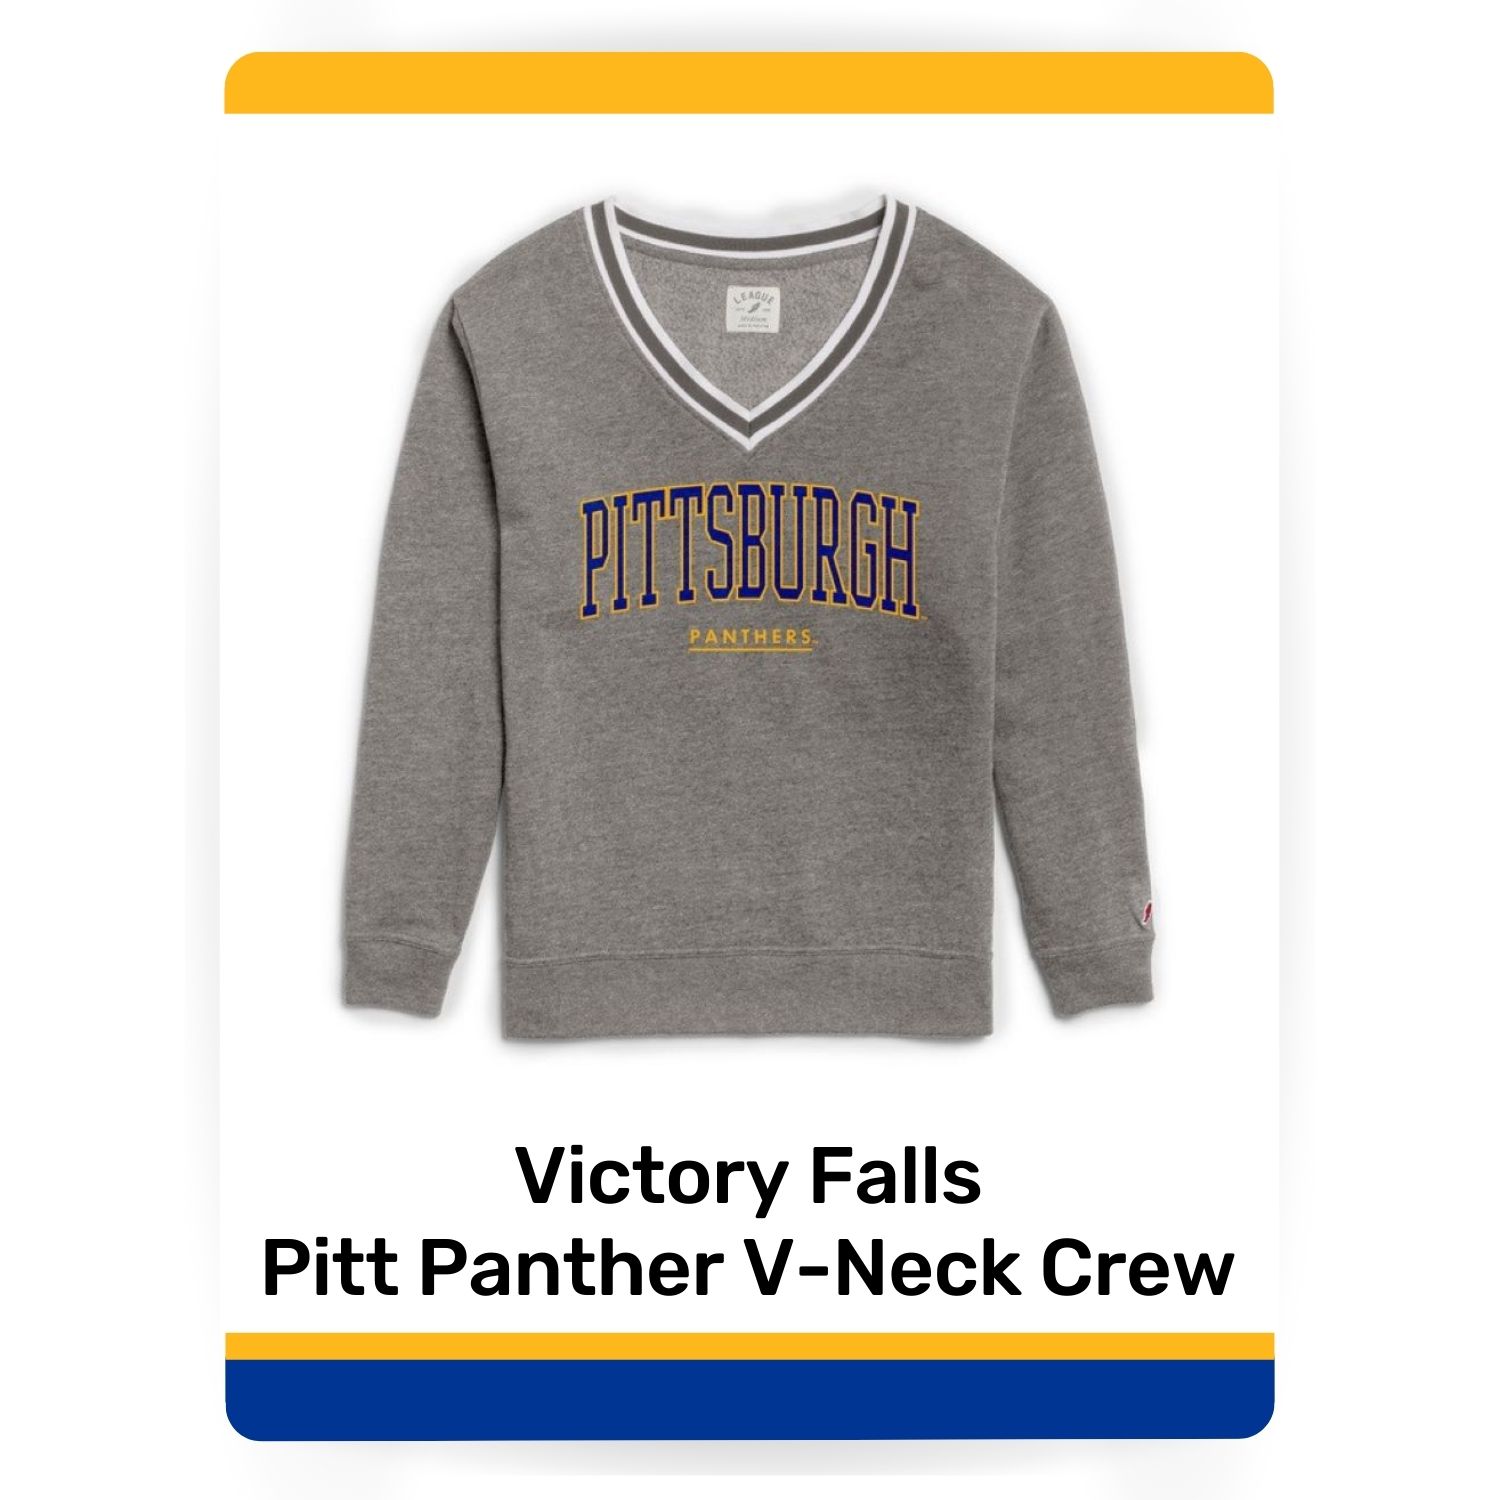 Victory Falls Pitt Panther V-Neck Crew